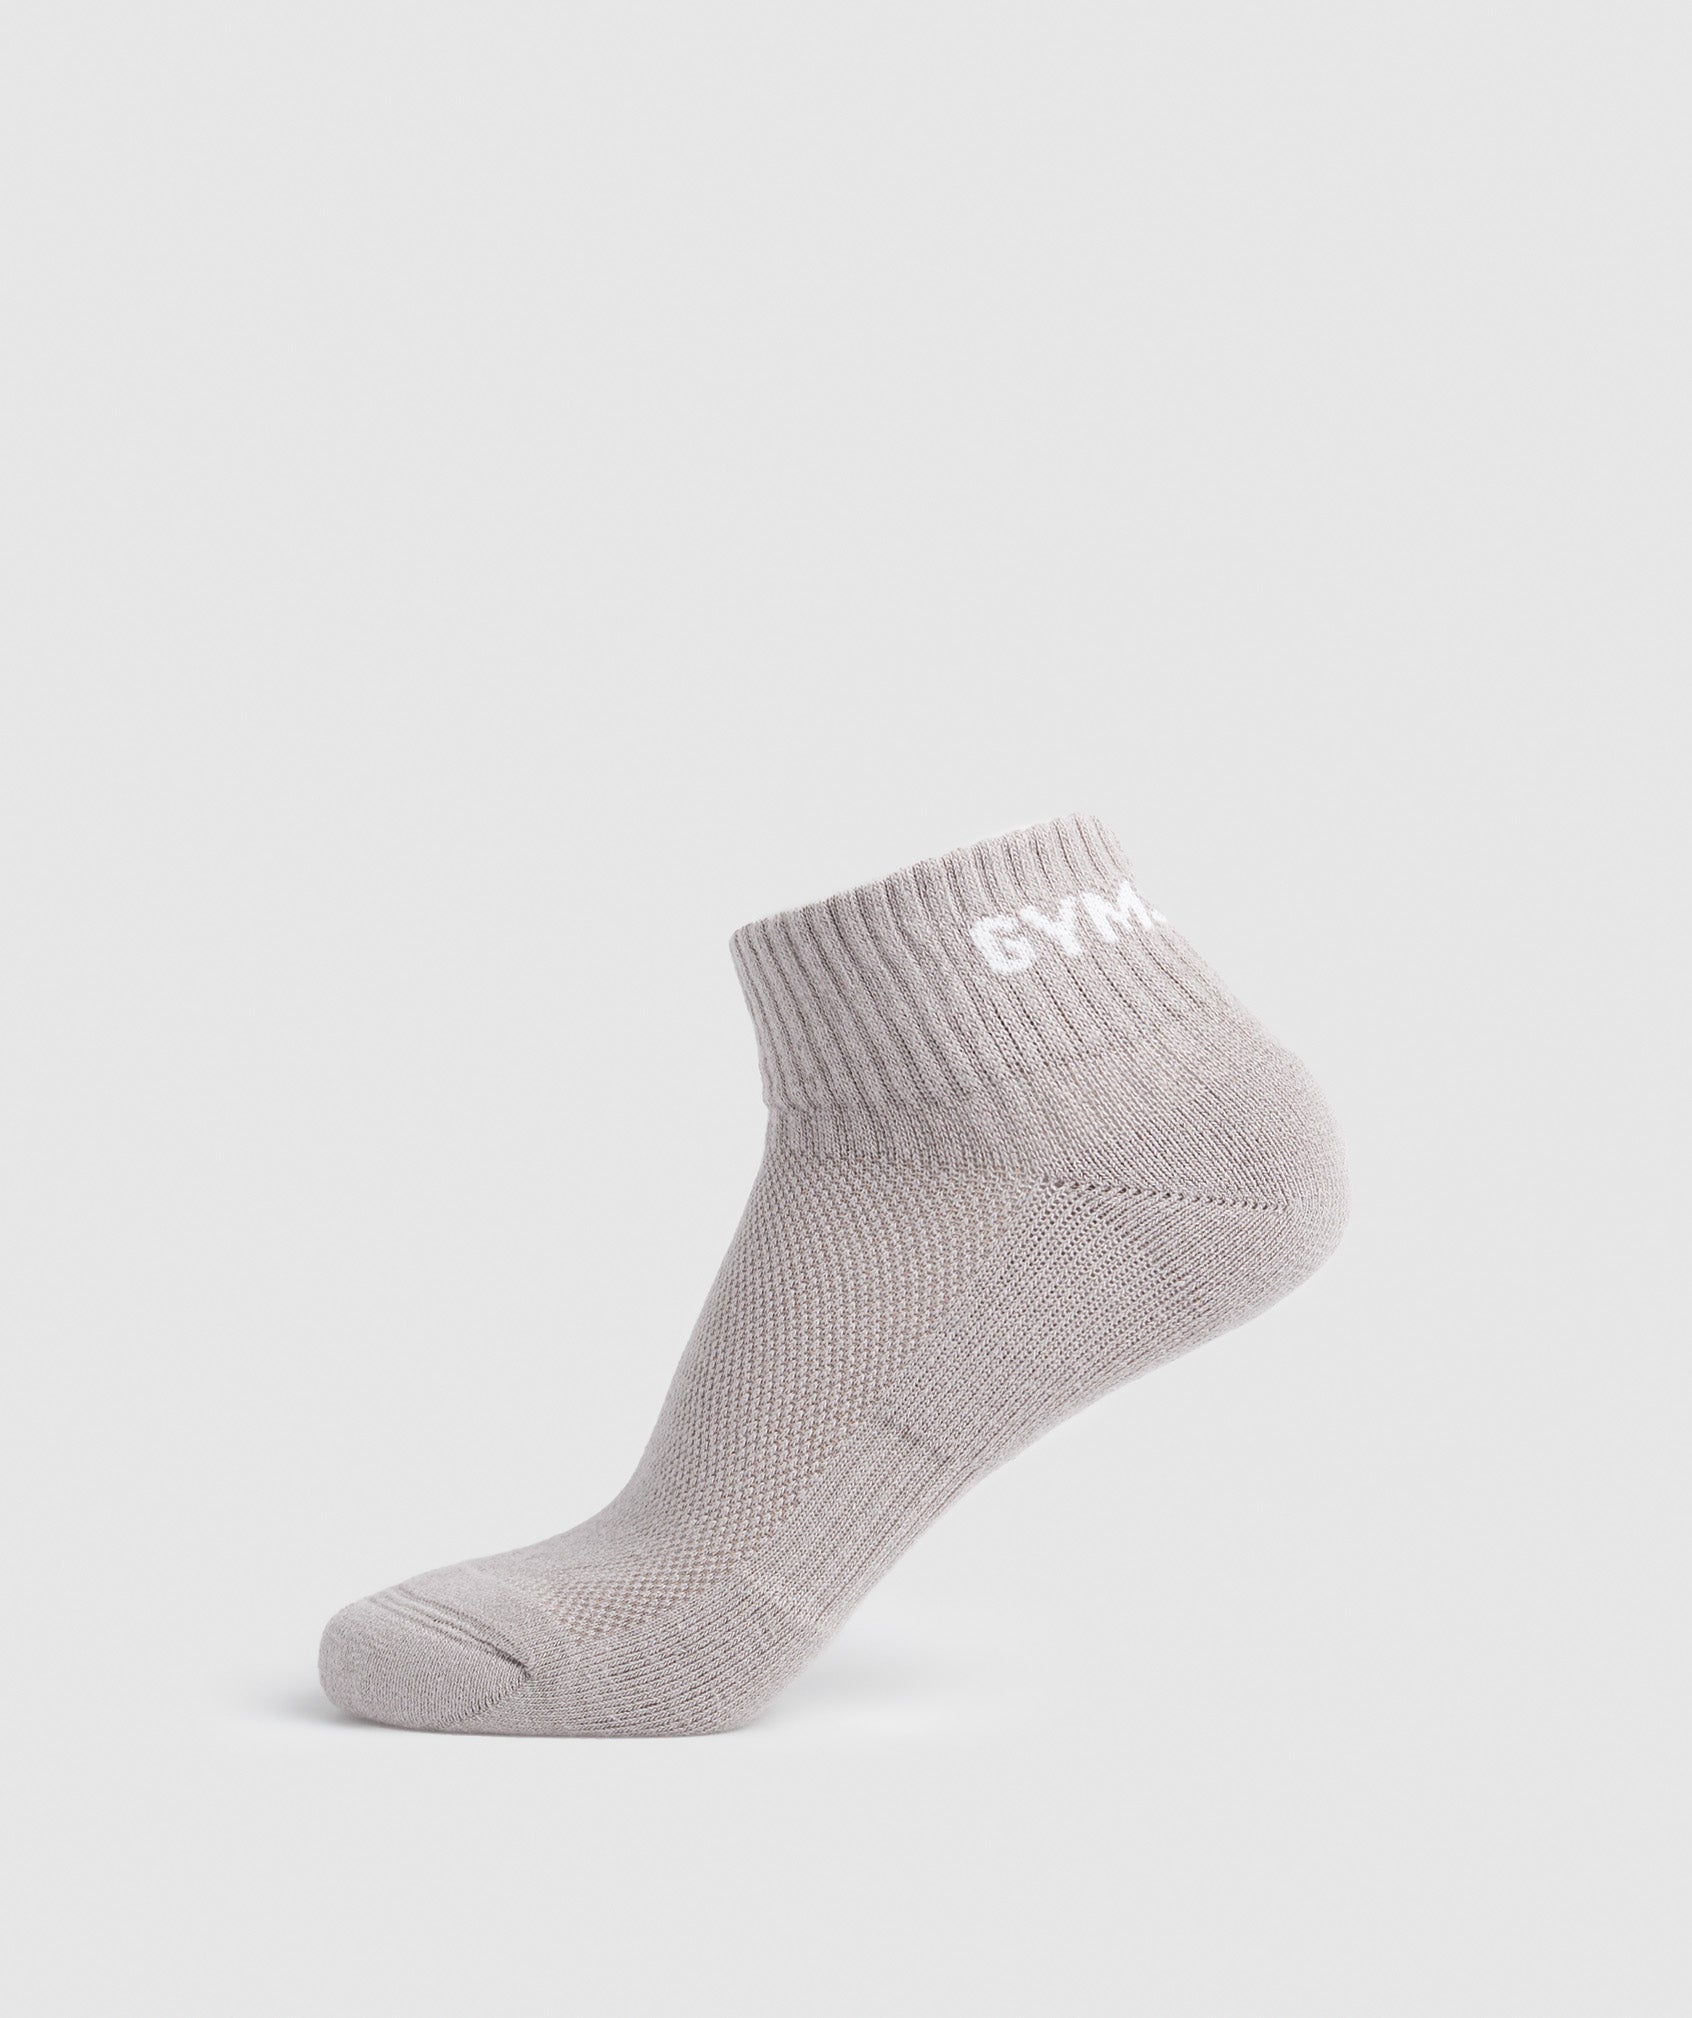 Jacquard Quarter Socks 3pk in Olive/White/Modern Blush Pink